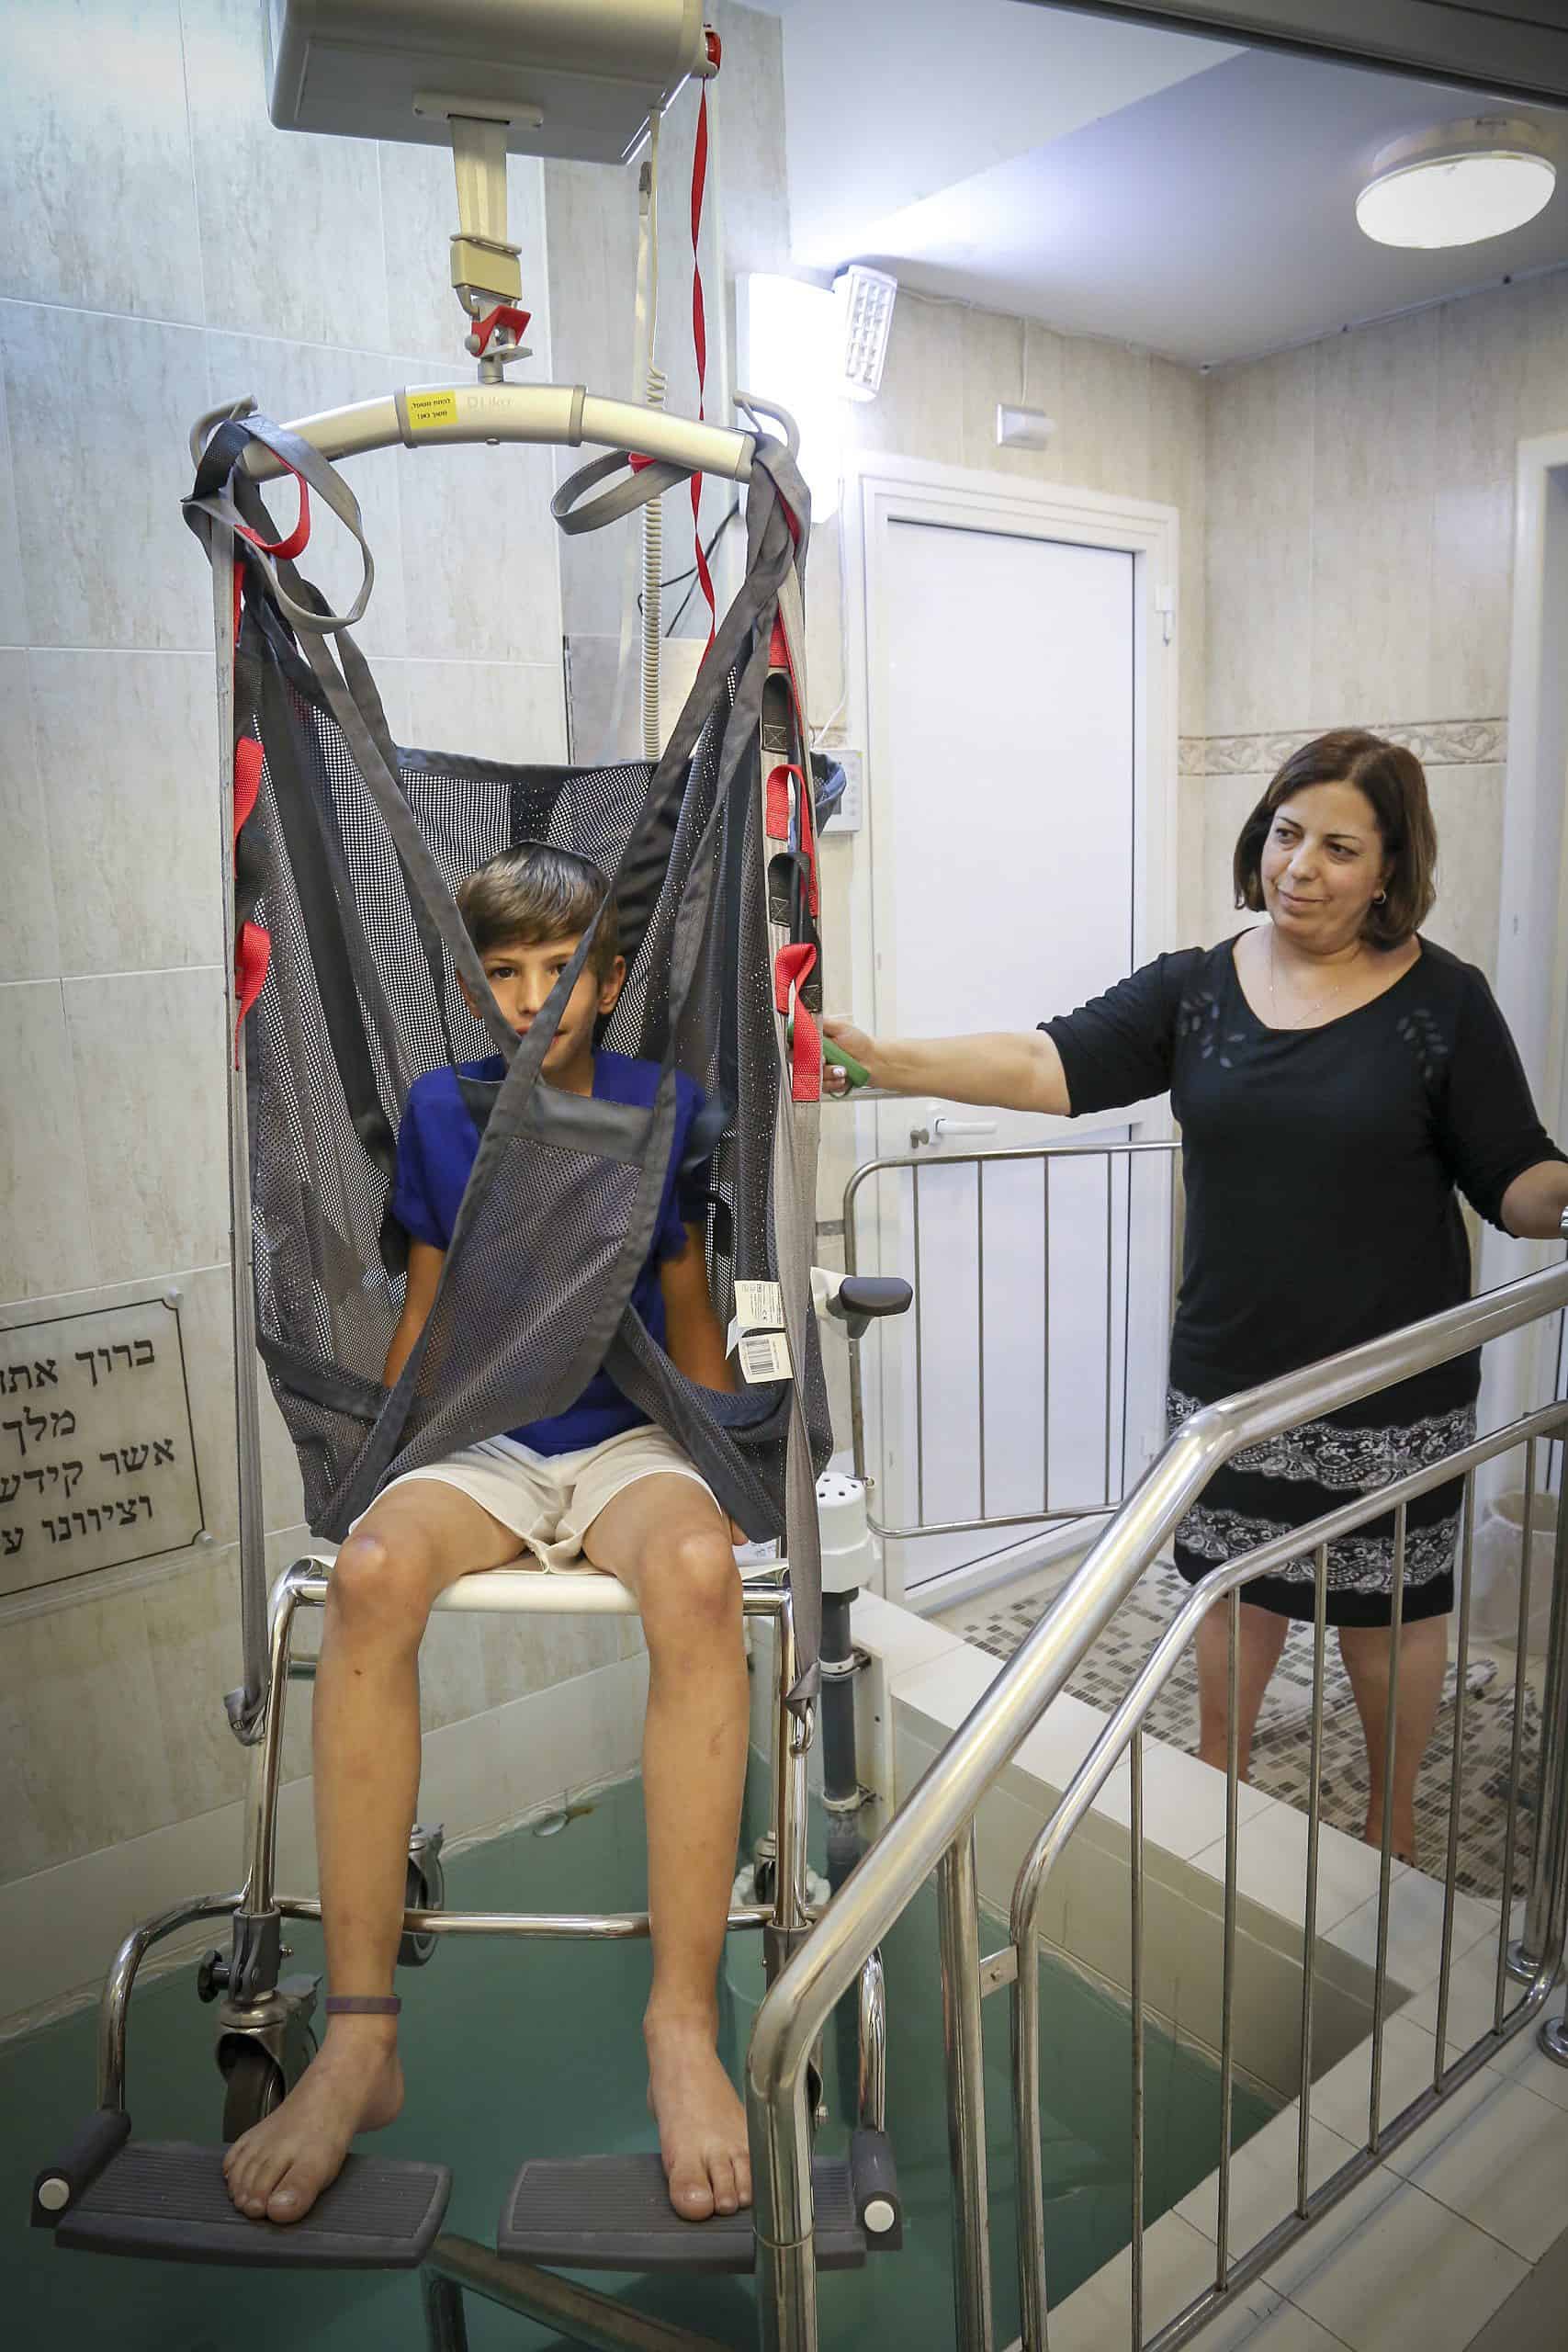 Jewish Boy in Wheelchair at Mikvah